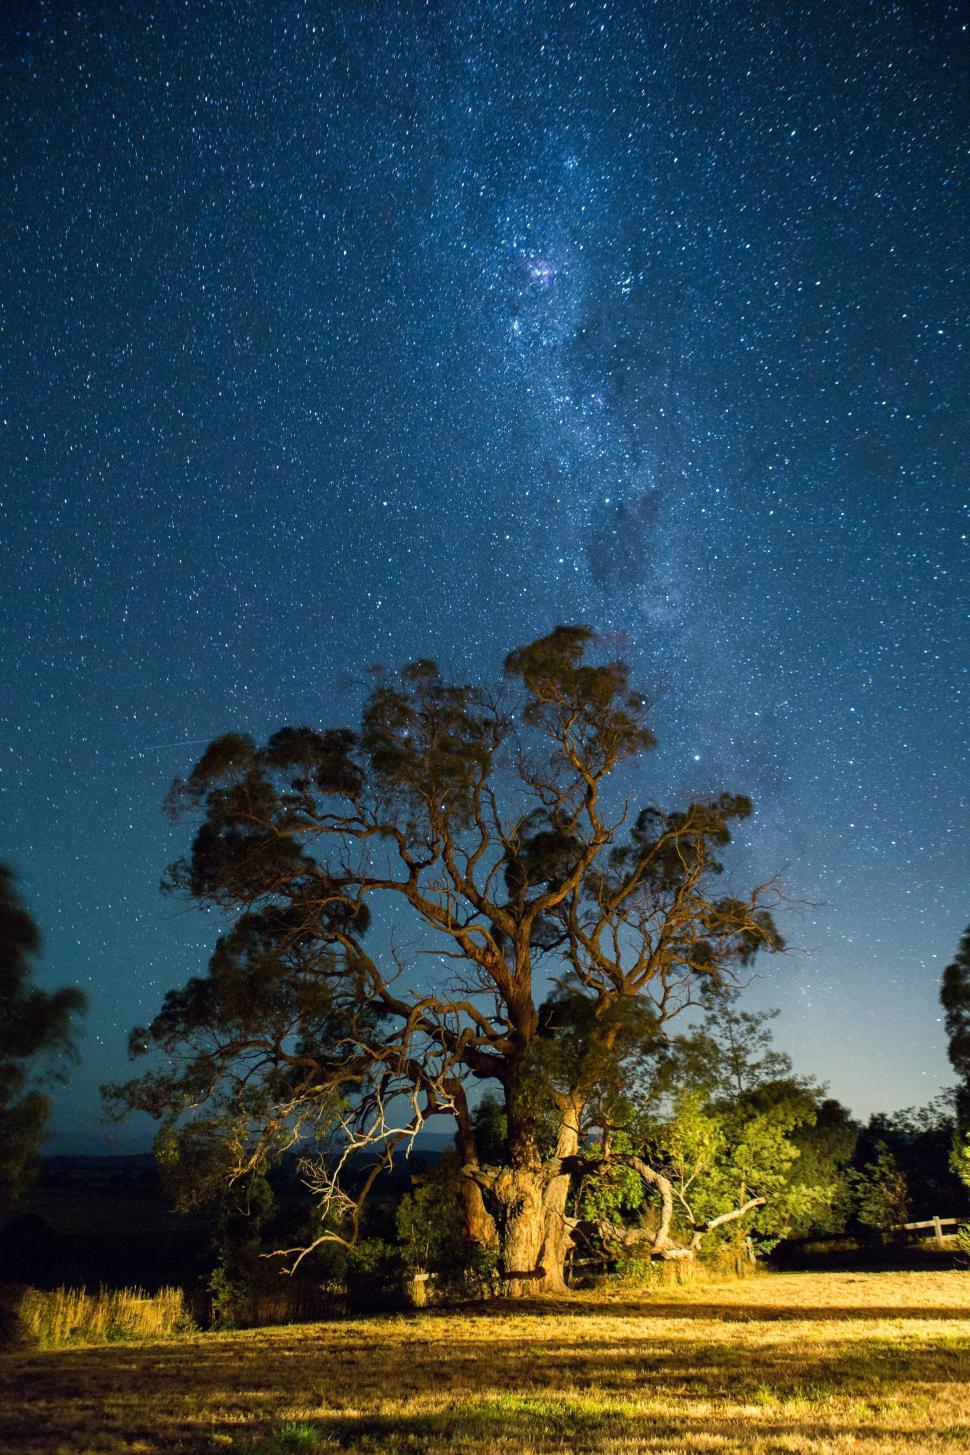 Free Image of Starry Night Sky Over Tree 